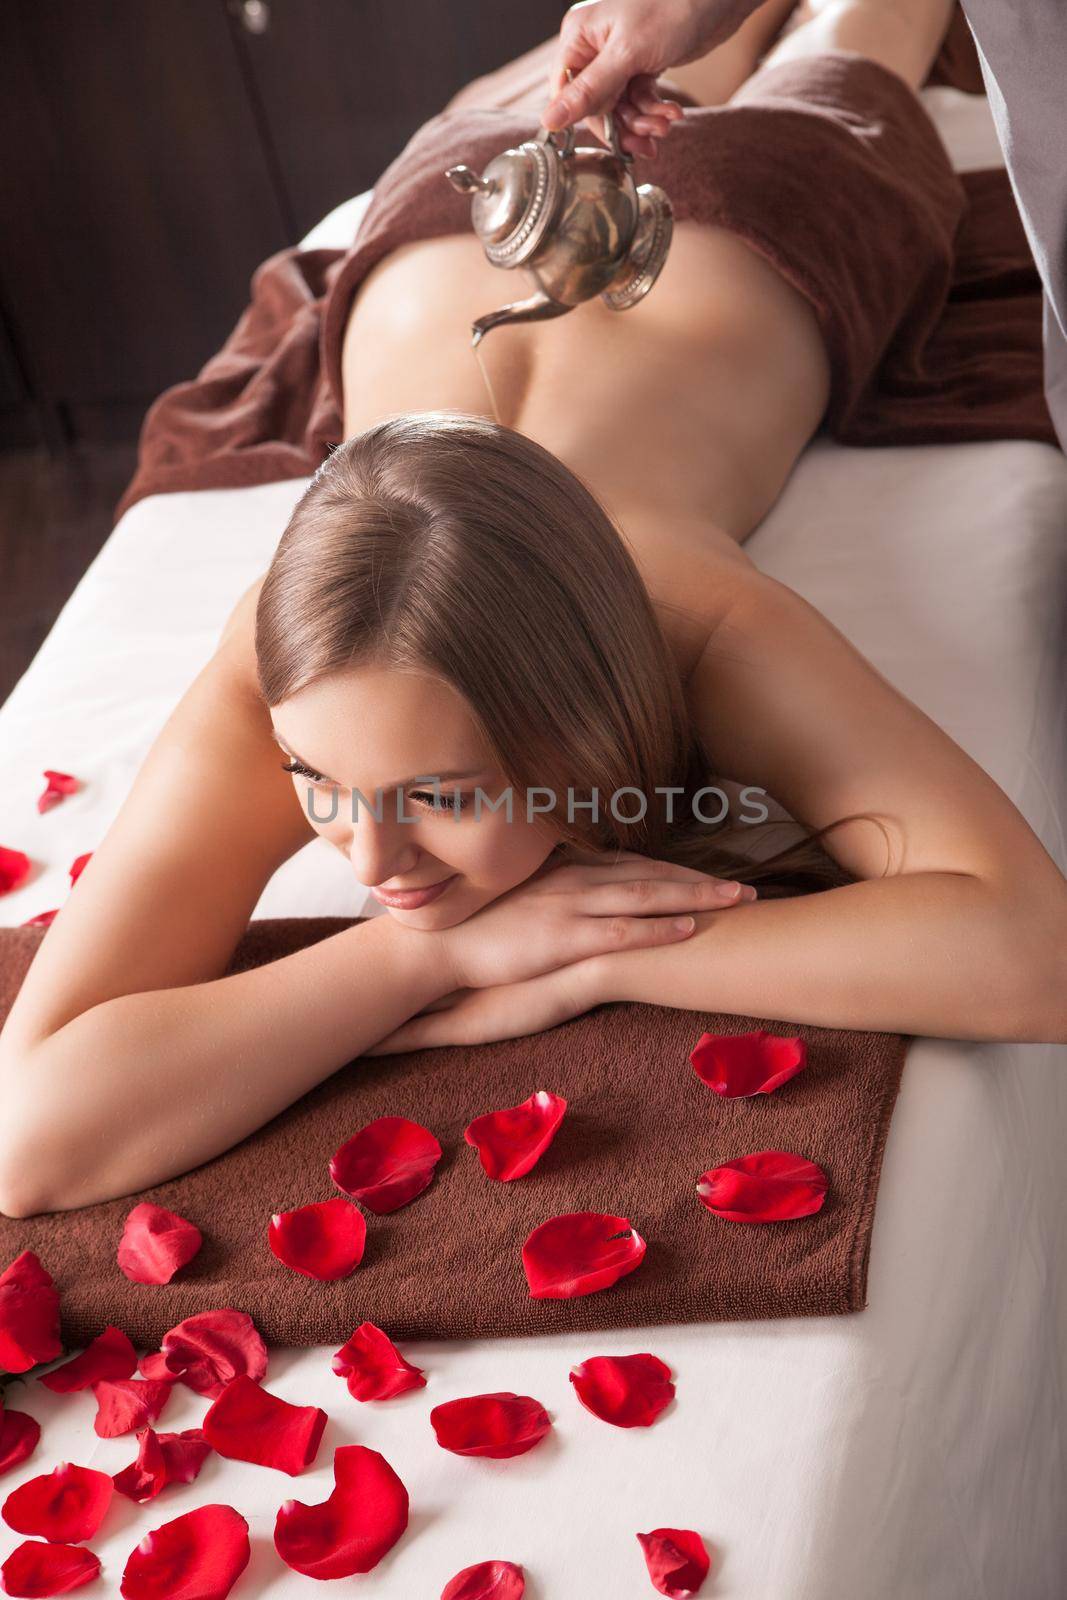 Woman enjoying a Ayurveda oil massage treatment in spa